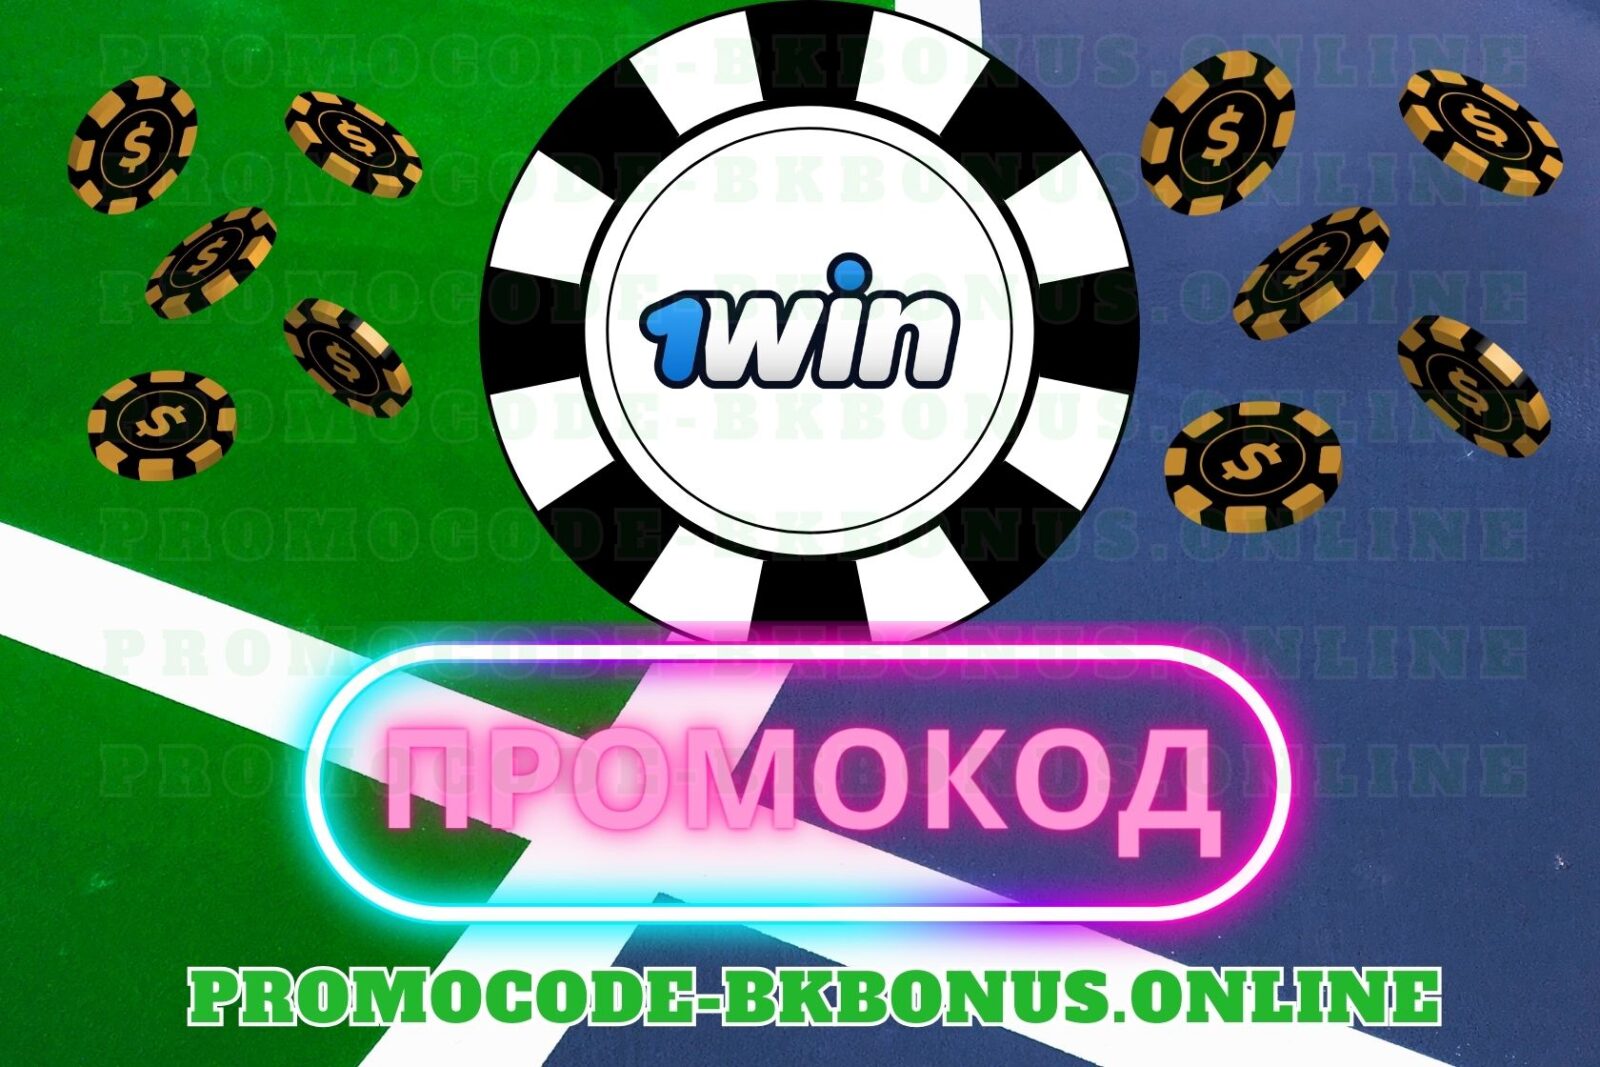 1win -promokod-fribet-bonus-promokod-pri-registracii-na-segodnya-bukmekerskaya-kontora-stavki-na-sport-kopiya-8-1